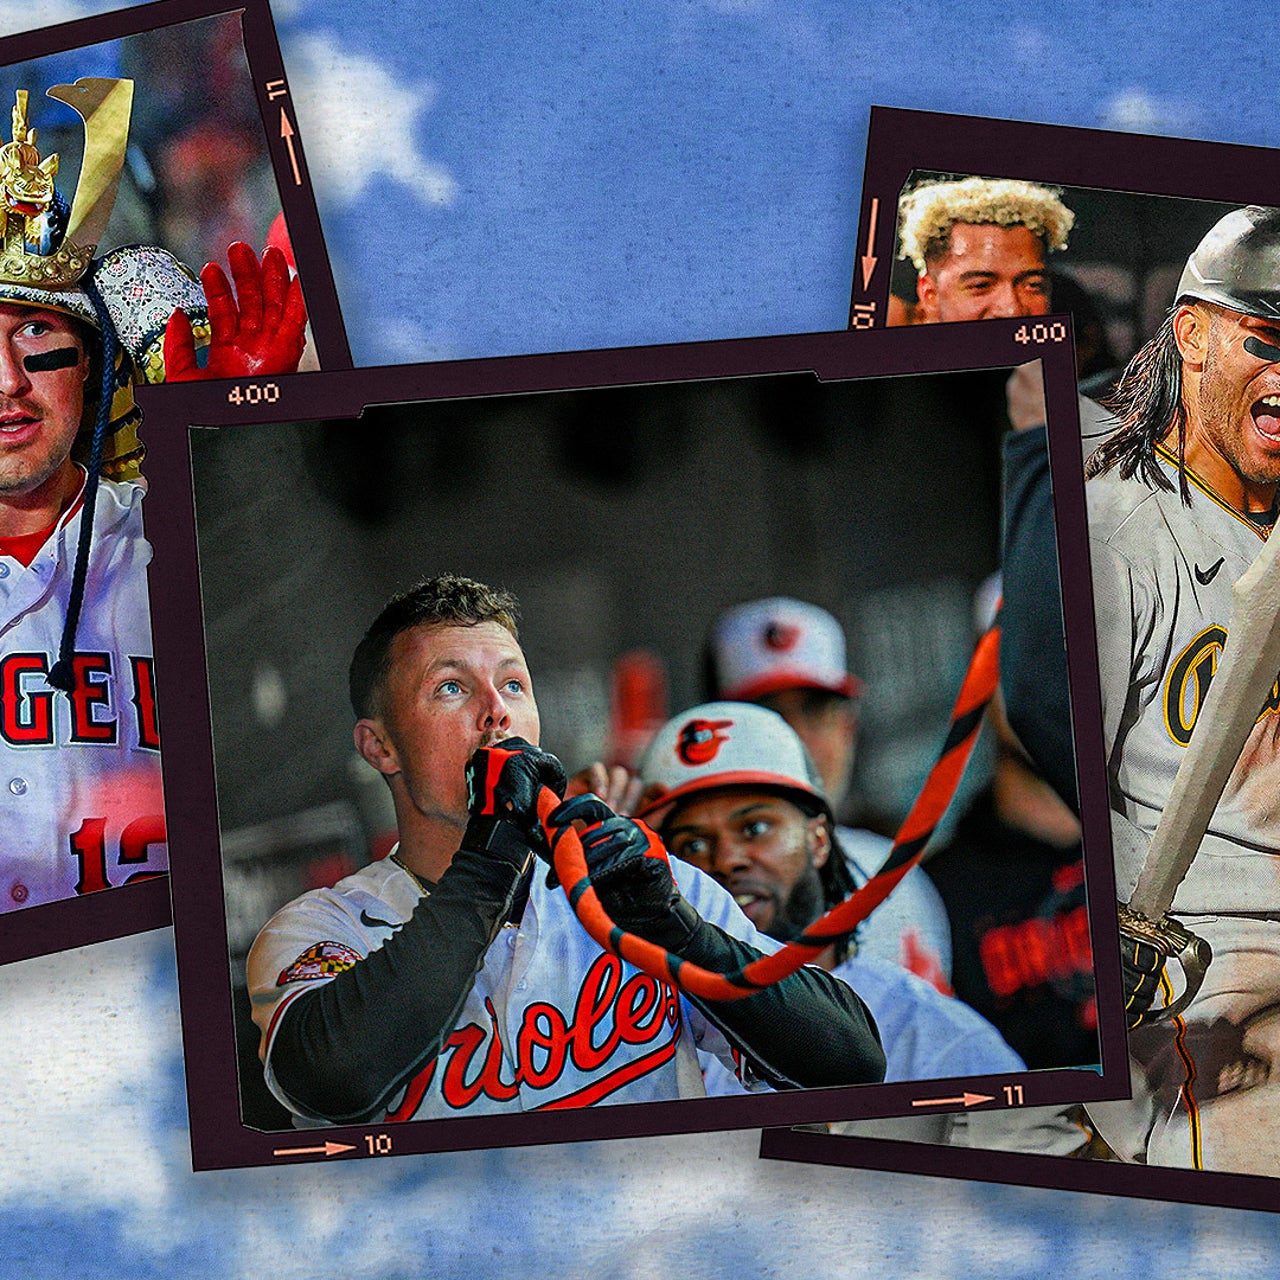 Swords, Samurai helmets and more: Ranking MLB's best home run celebrations